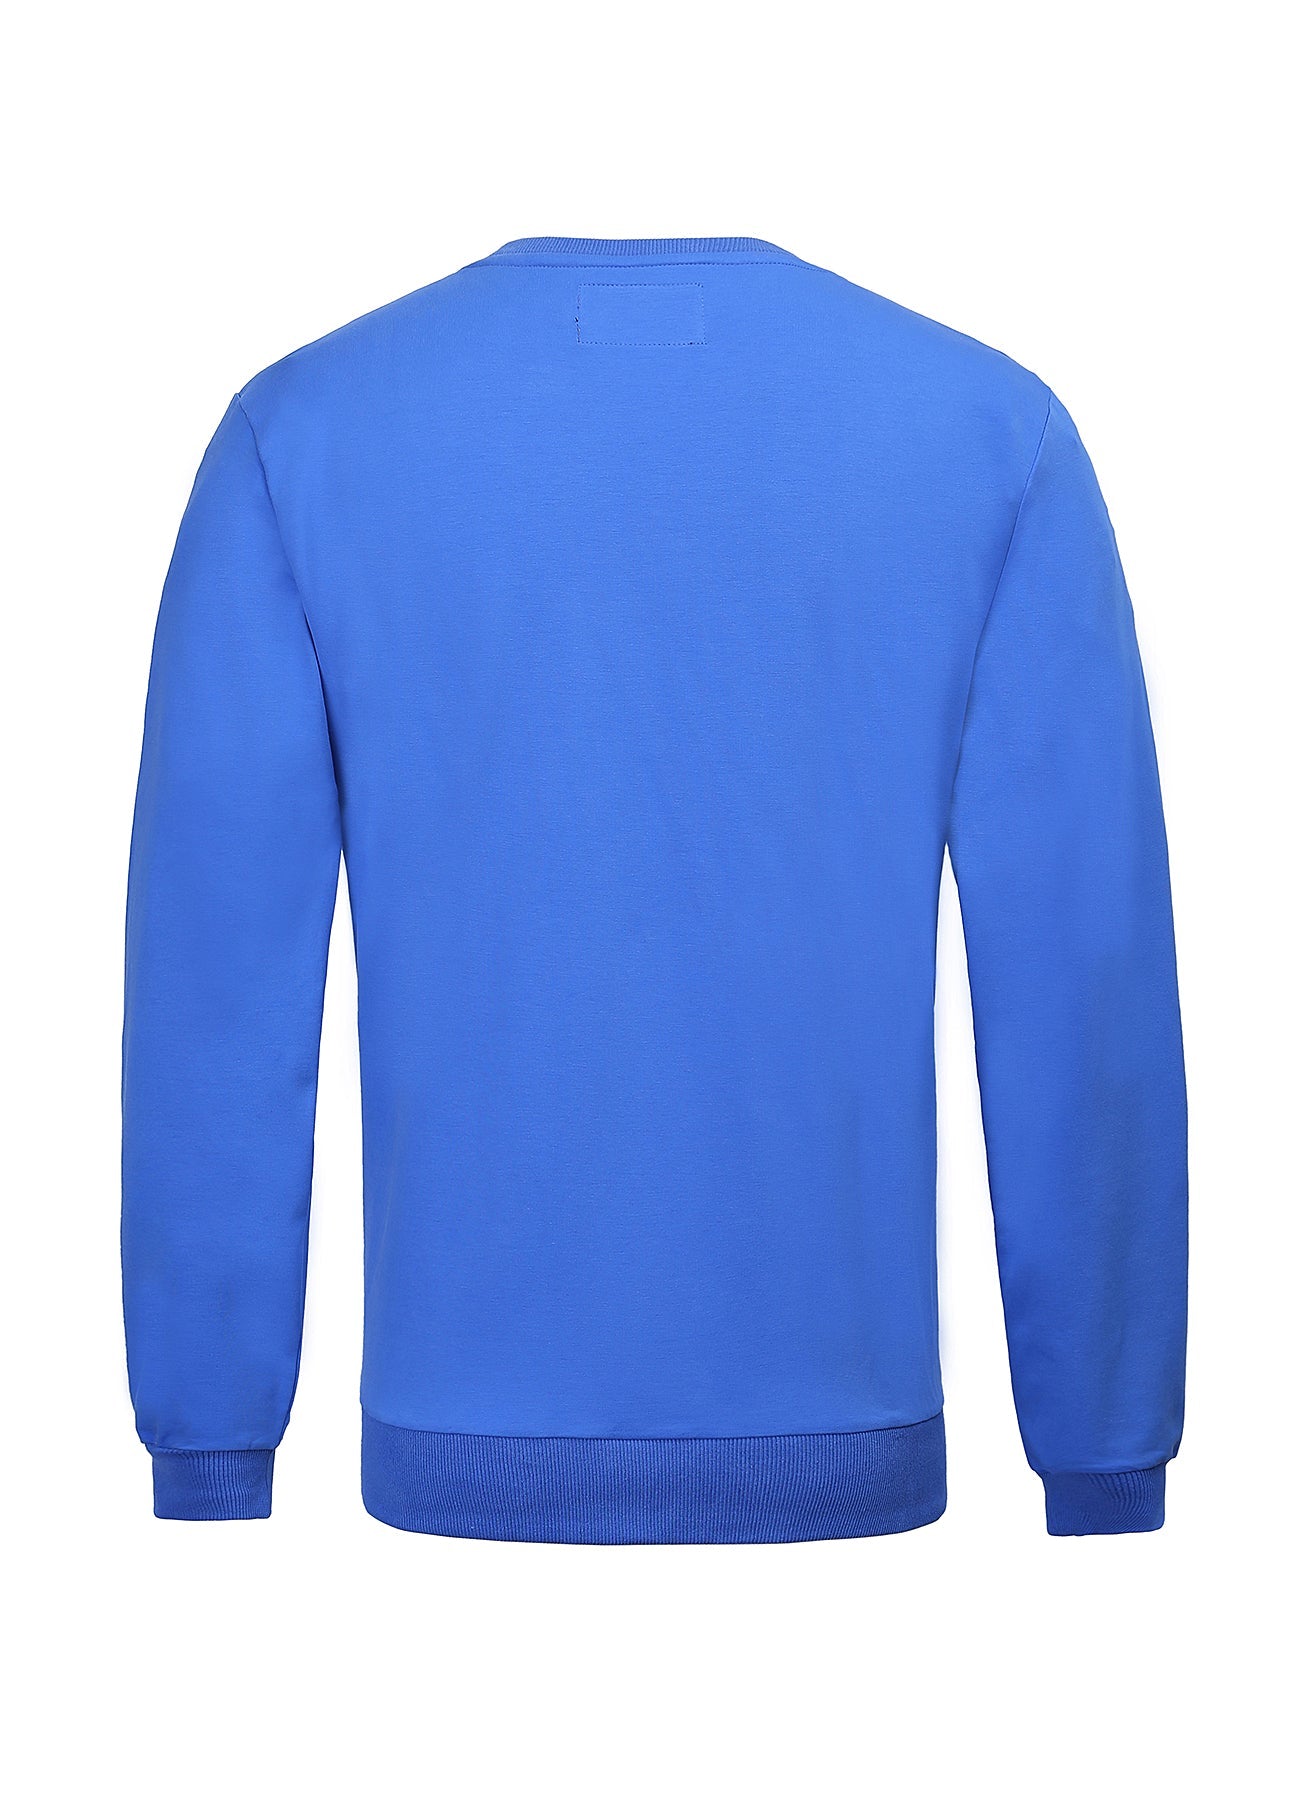 Embroidery Blue Cotton Sweatshirt With Big Logo